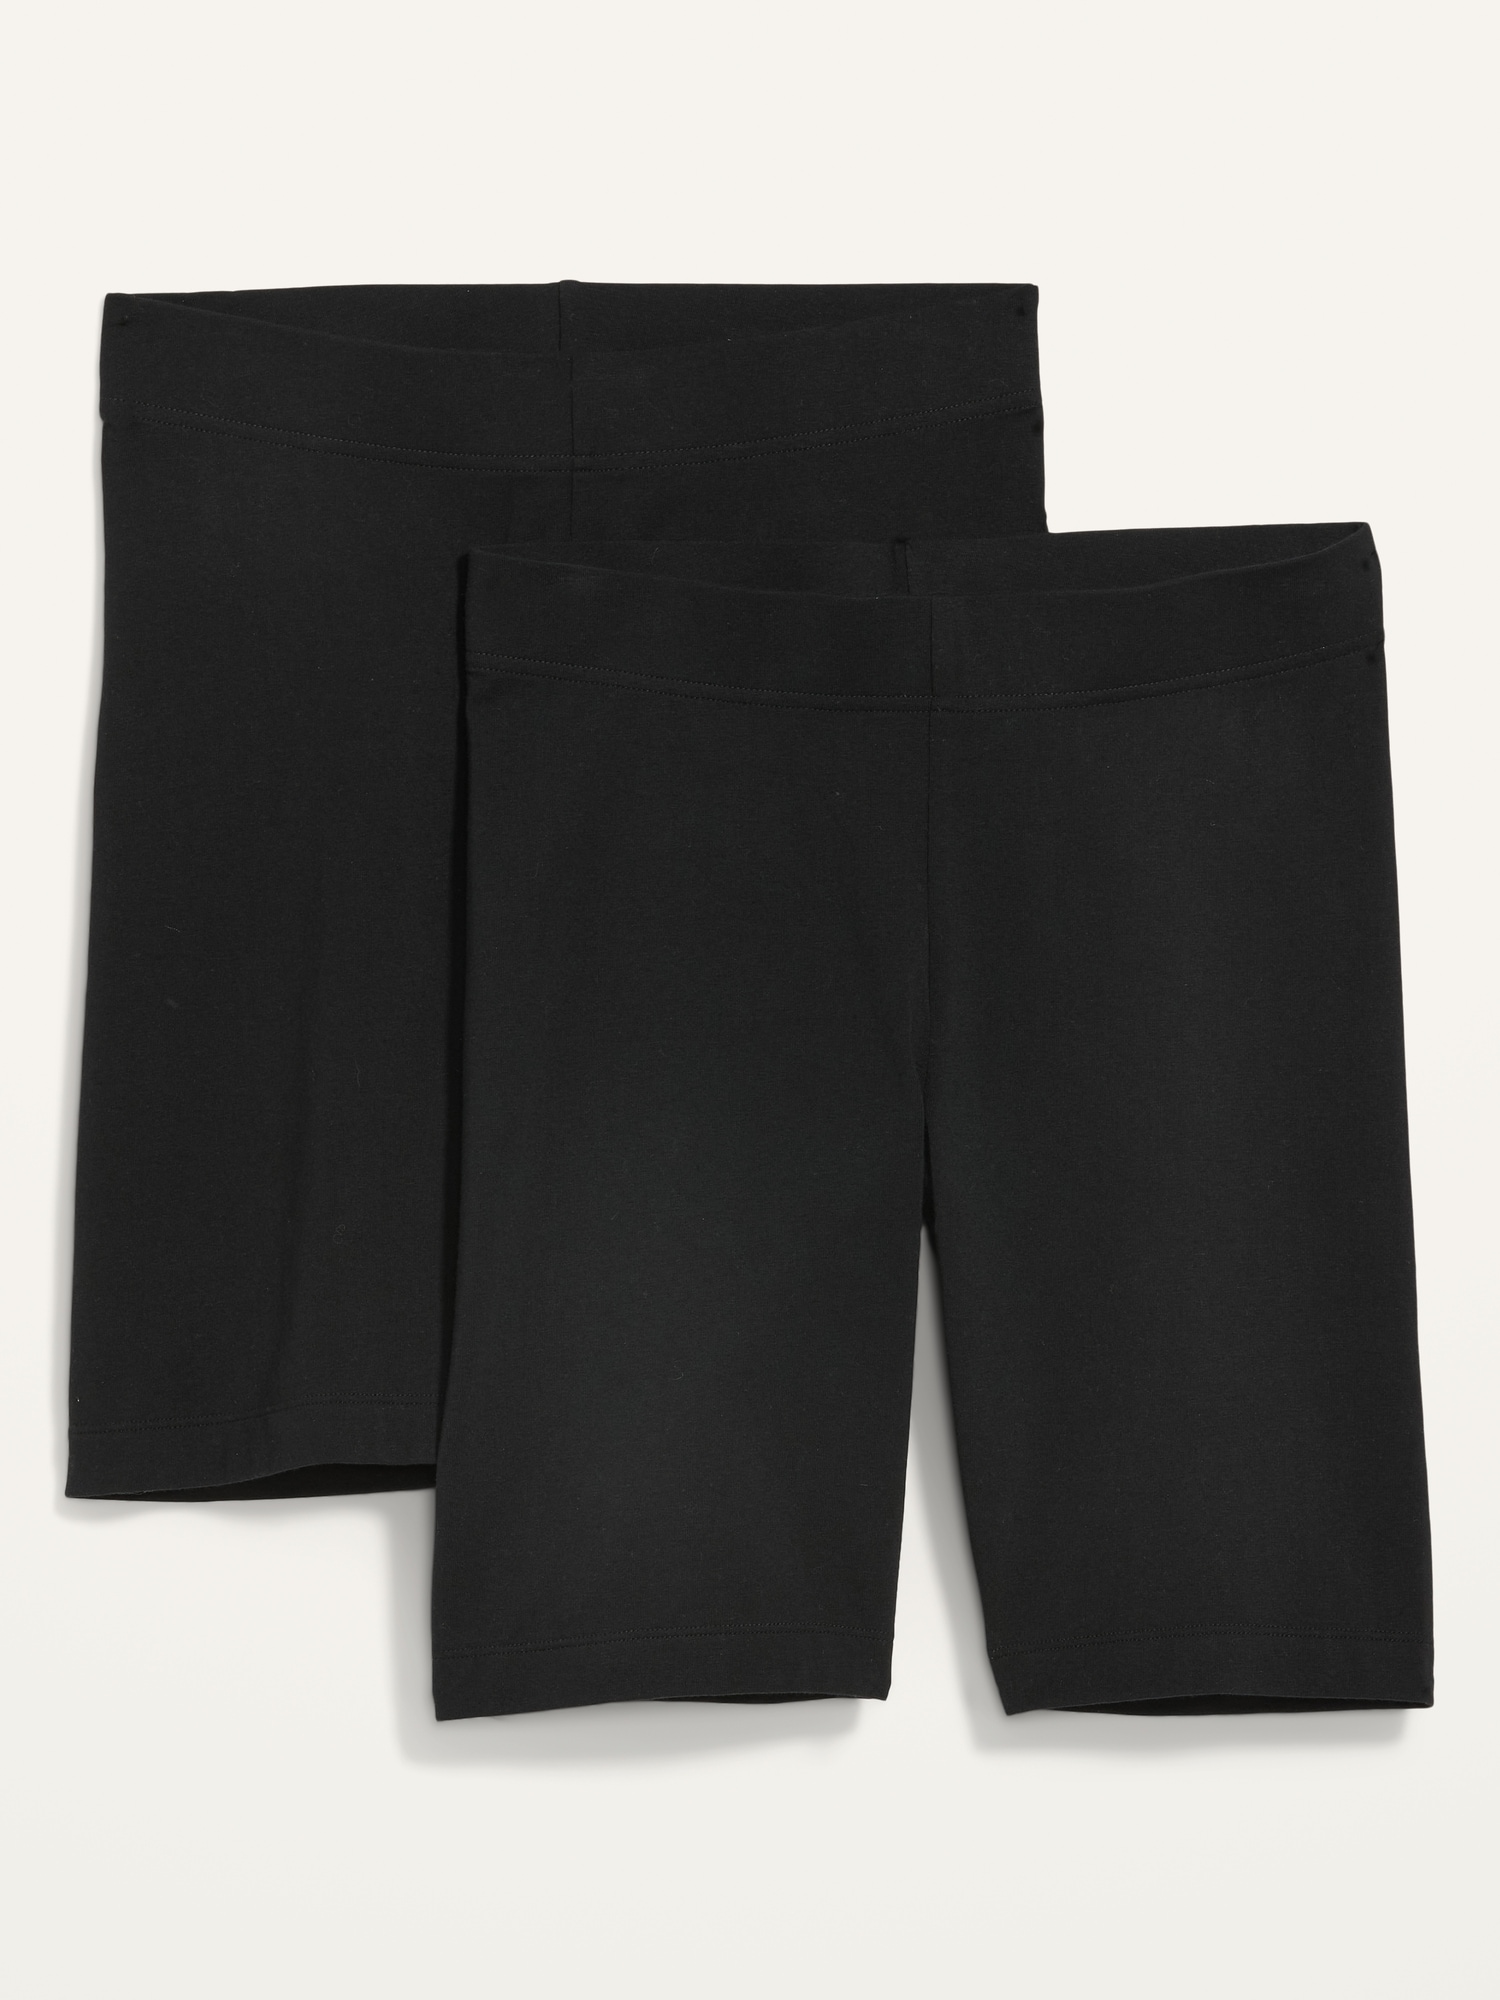 High-Waisted Biker Shorts 2-Pack for Women -- 8-inch inseam